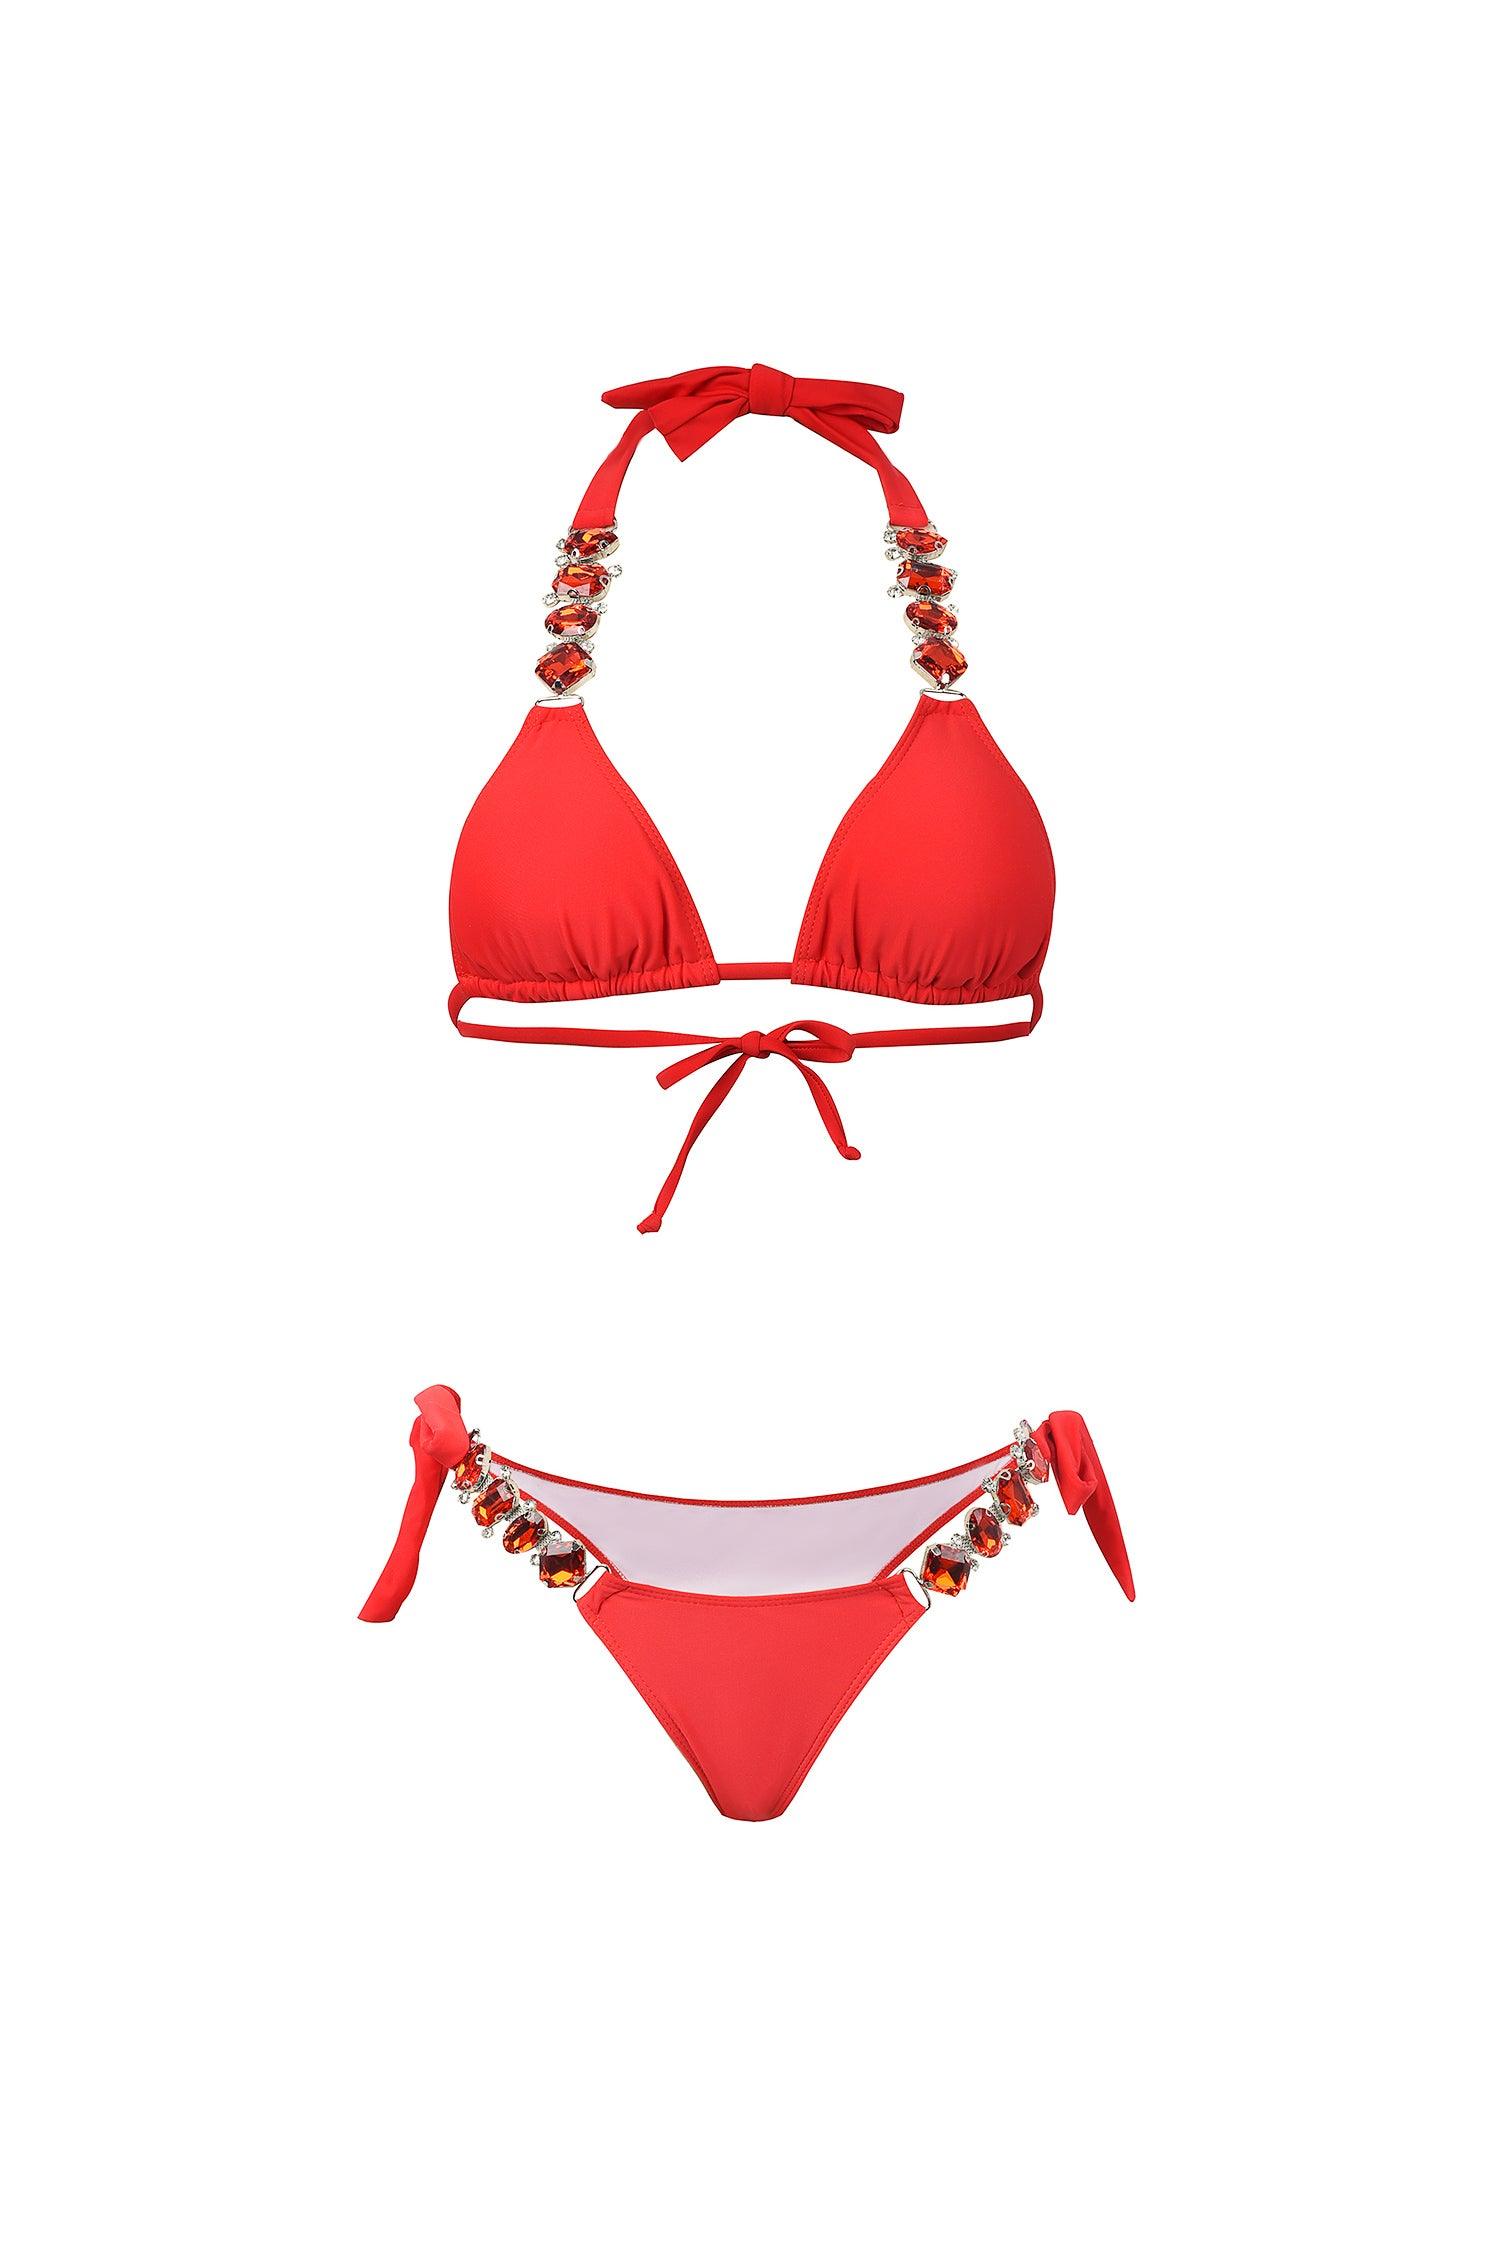 Huxley Diamond Bikini - Red - Bellabarnett